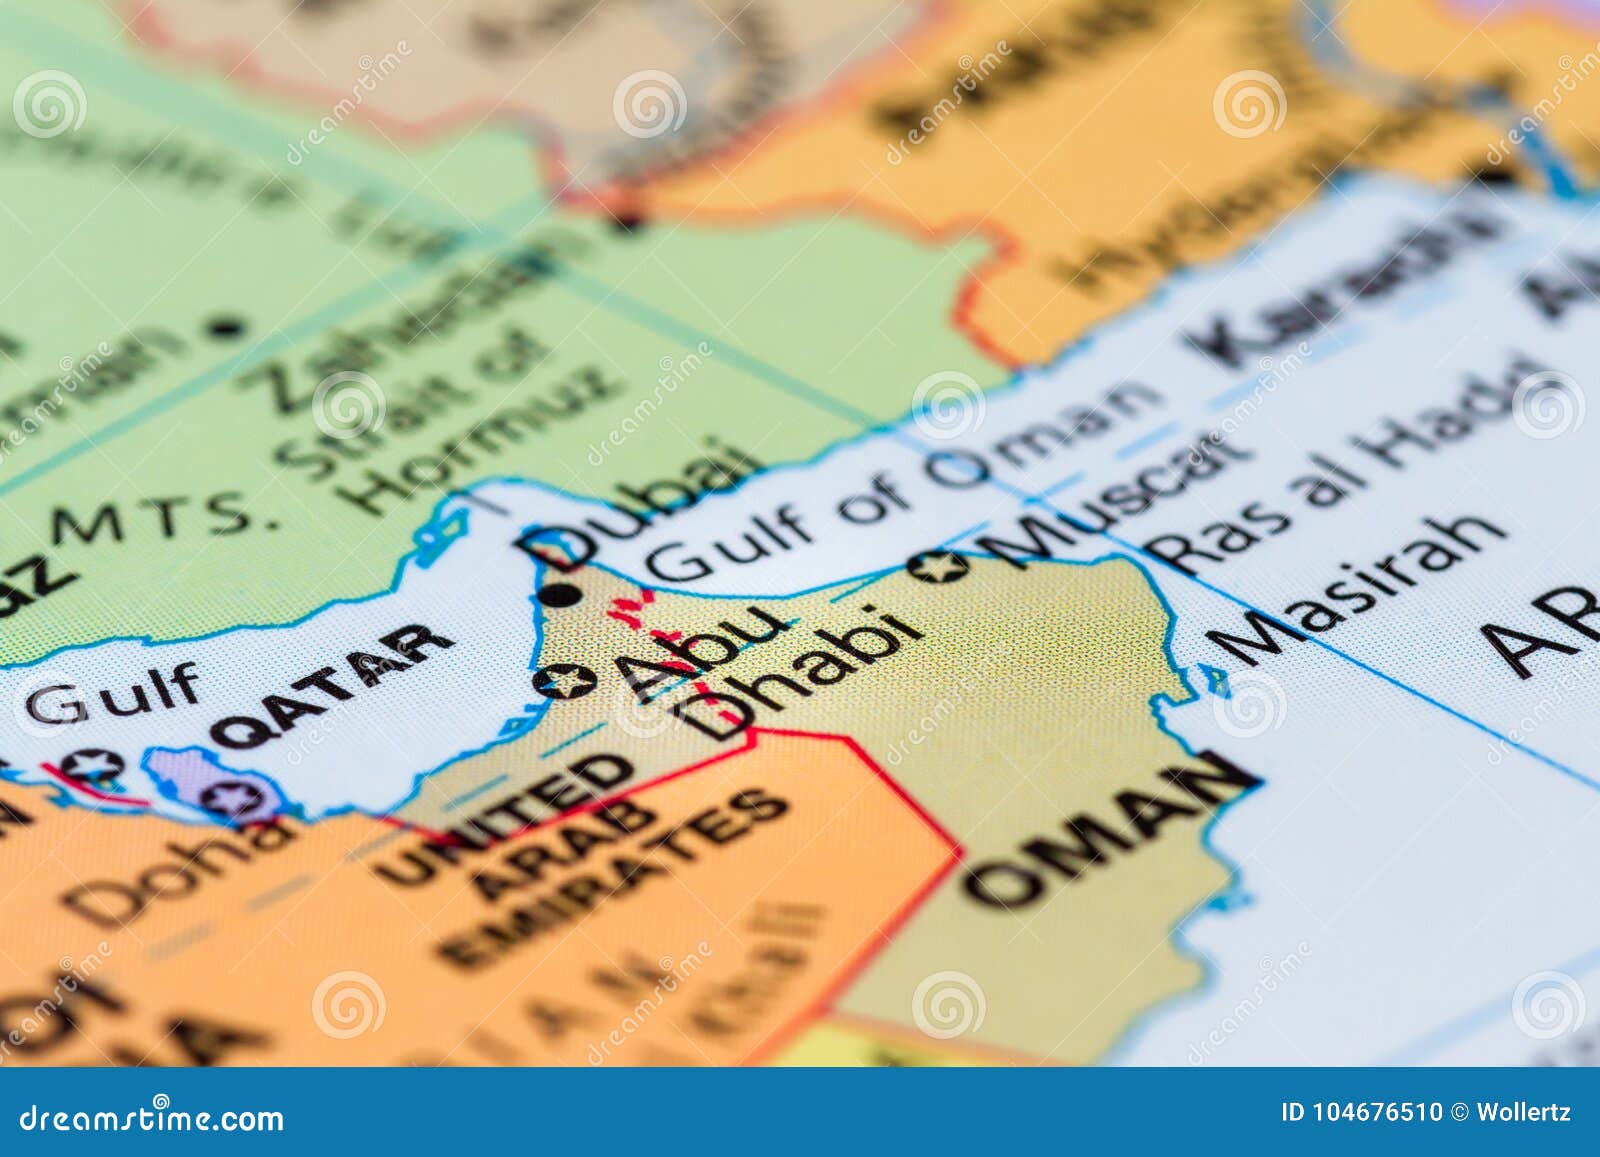 abu dhabi world map Abu Dhabi On A Map Stock Photo Image Of Colors Focus 104676510 abu dhabi world map